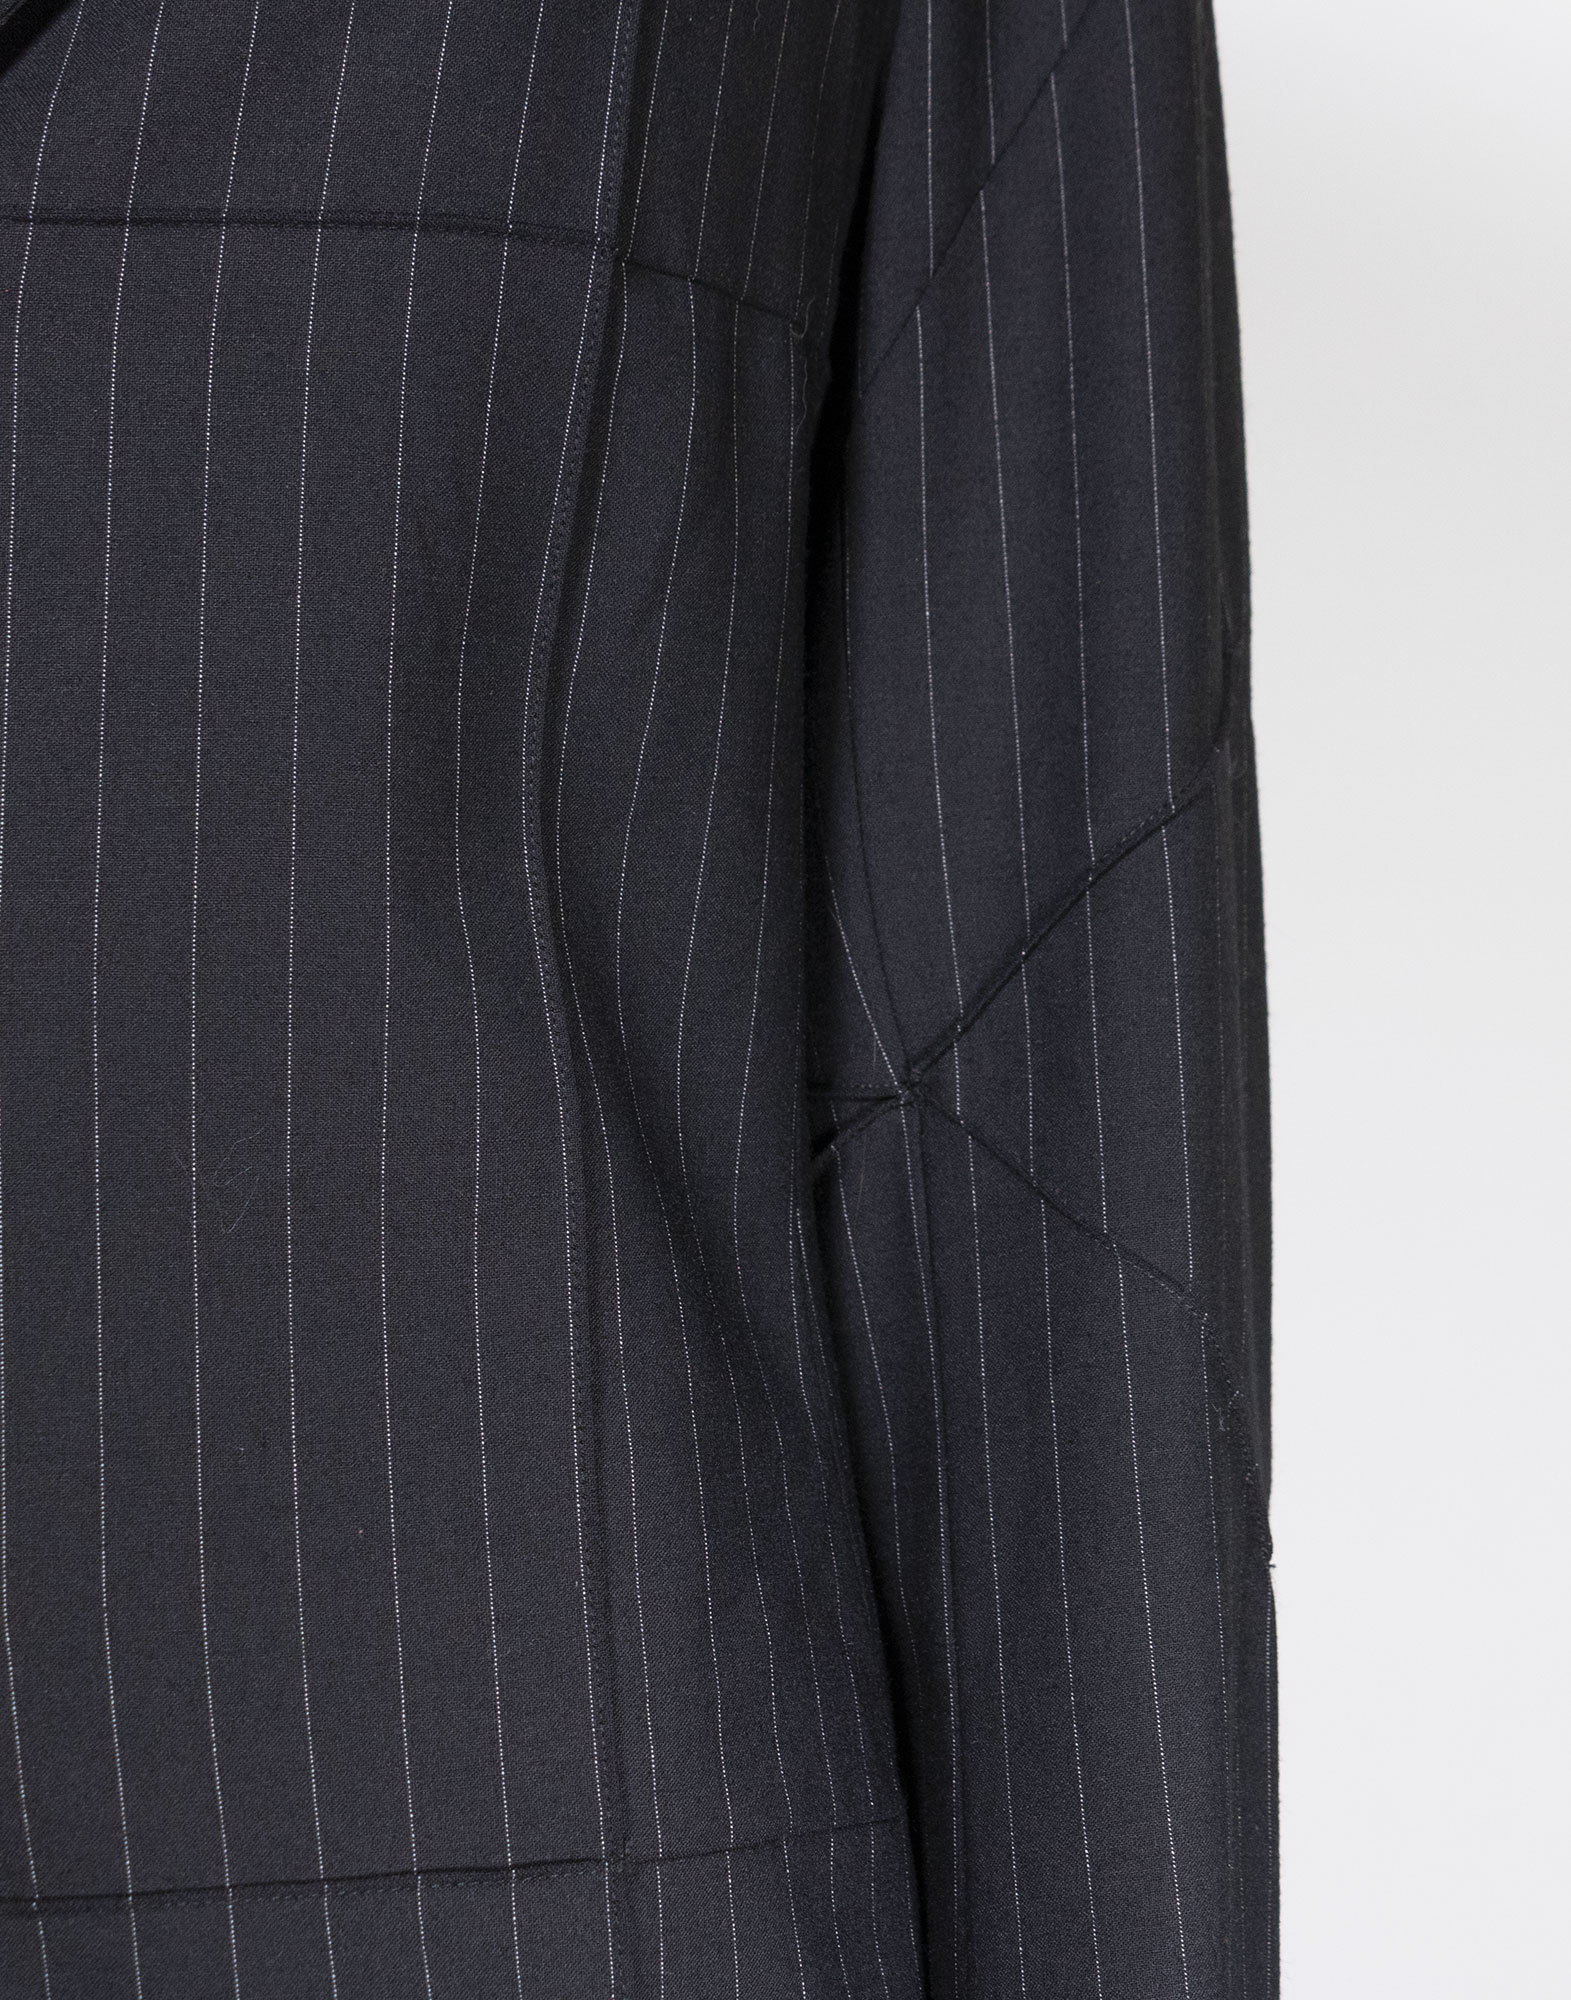 Moschino - 80s/90s Pinstripe suit